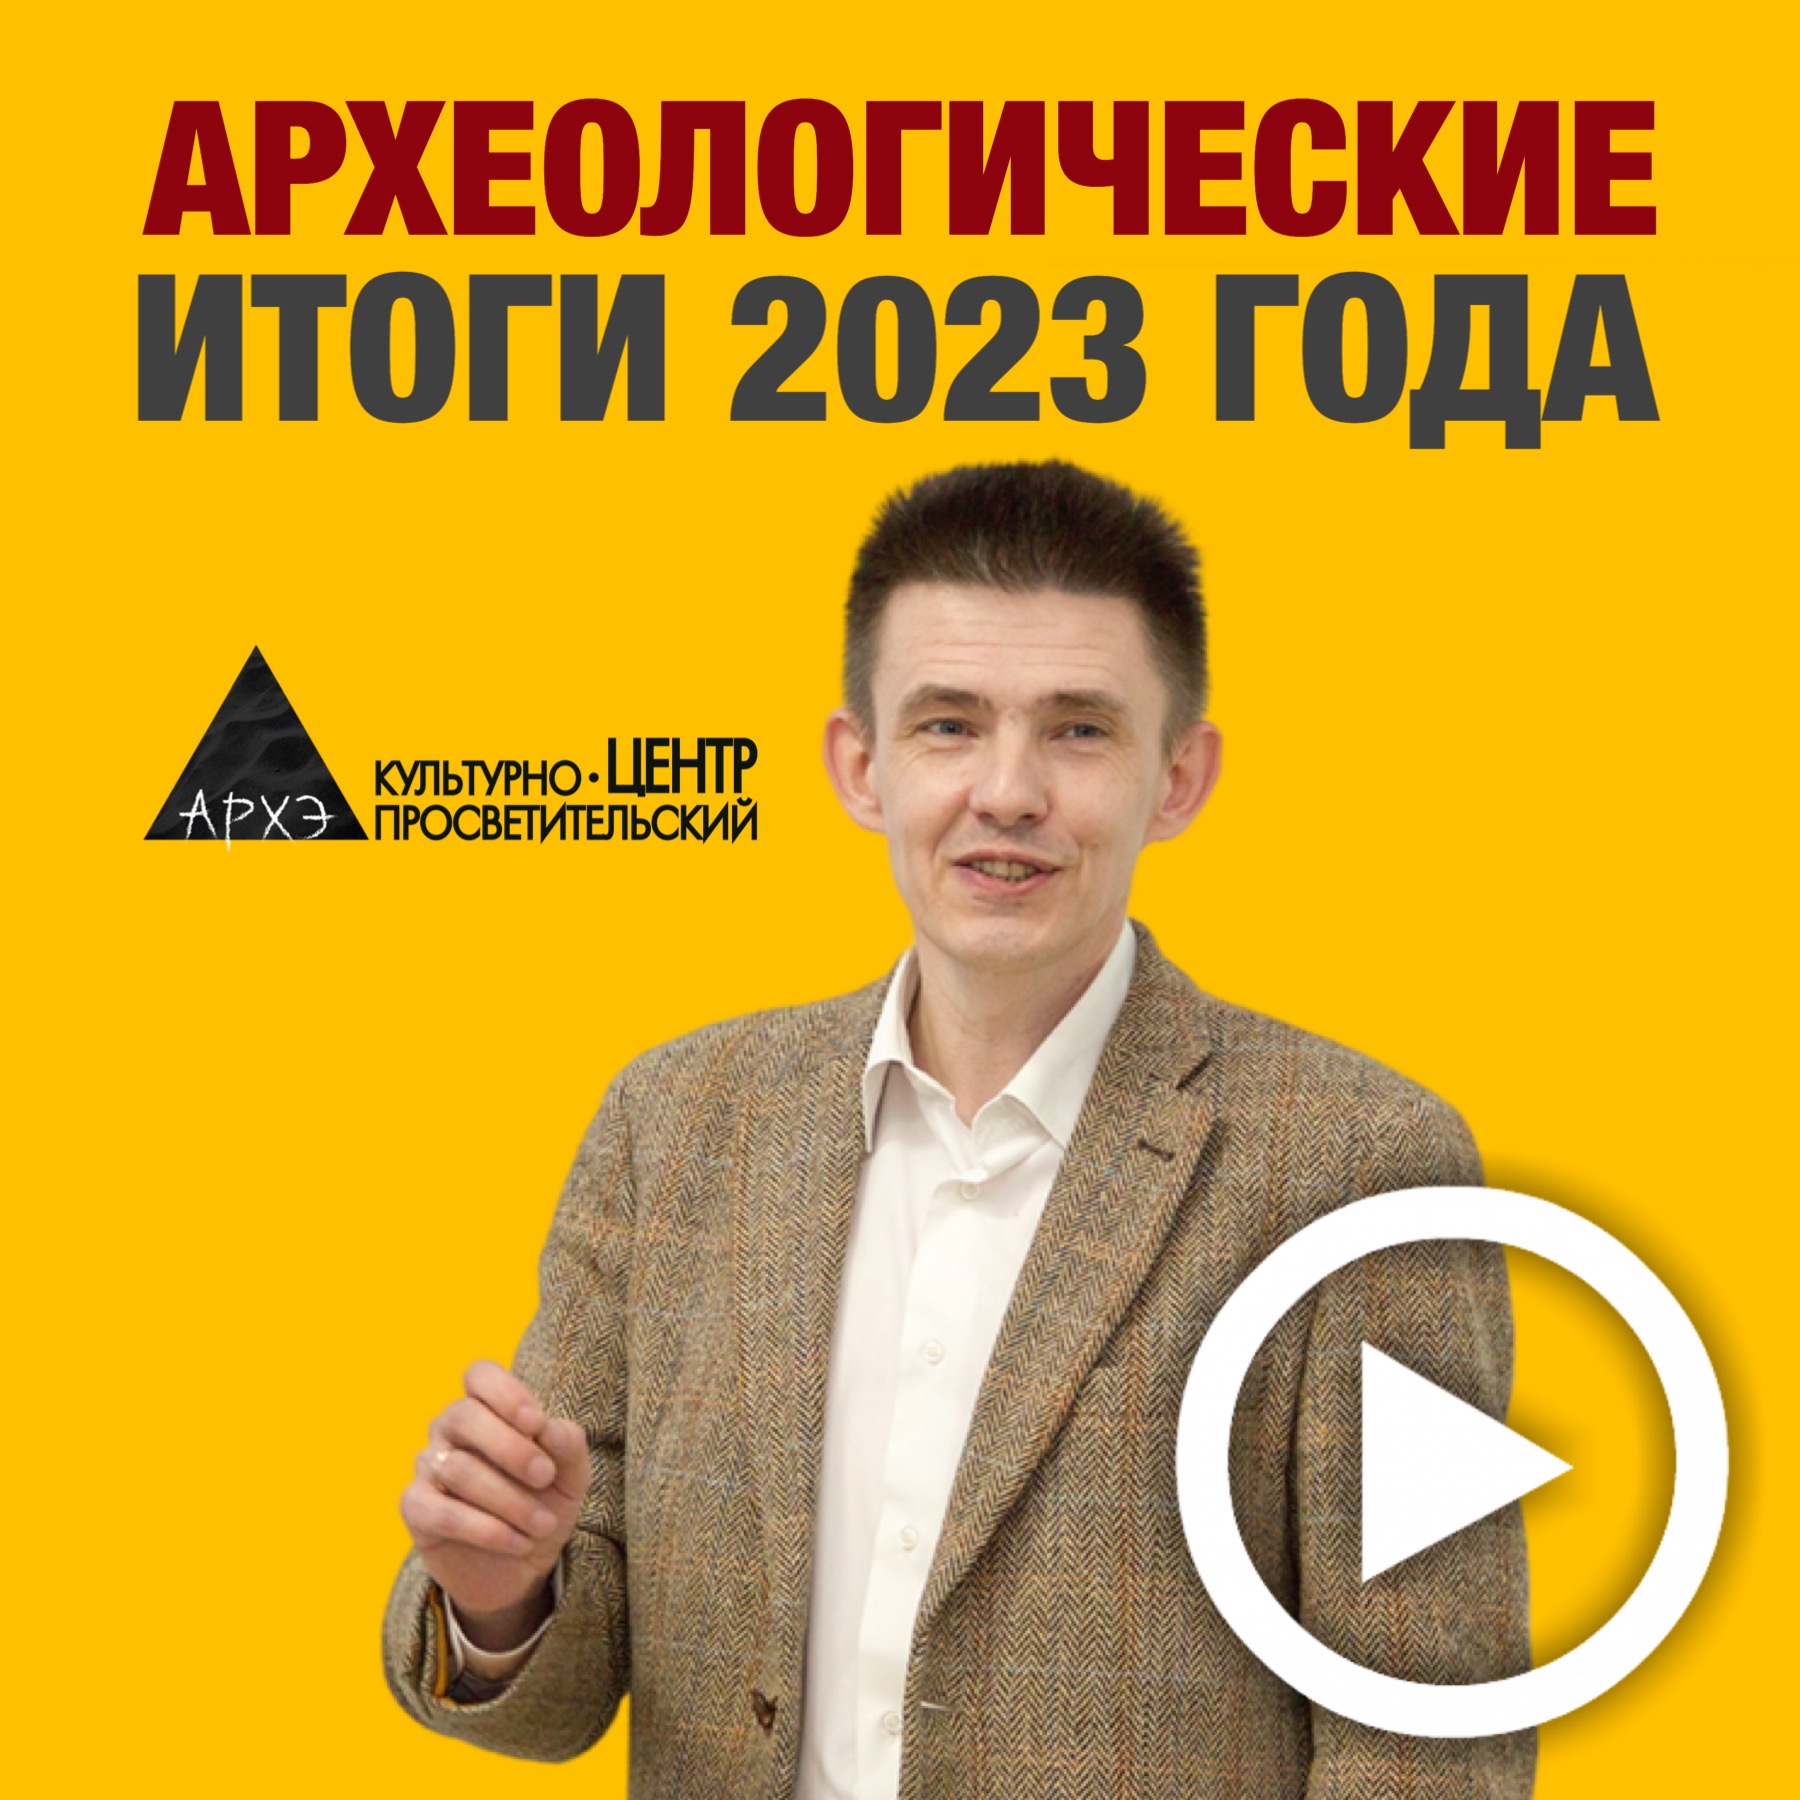 Публичная лекция В.С. Житенева "Археологические итоги 2023 года"